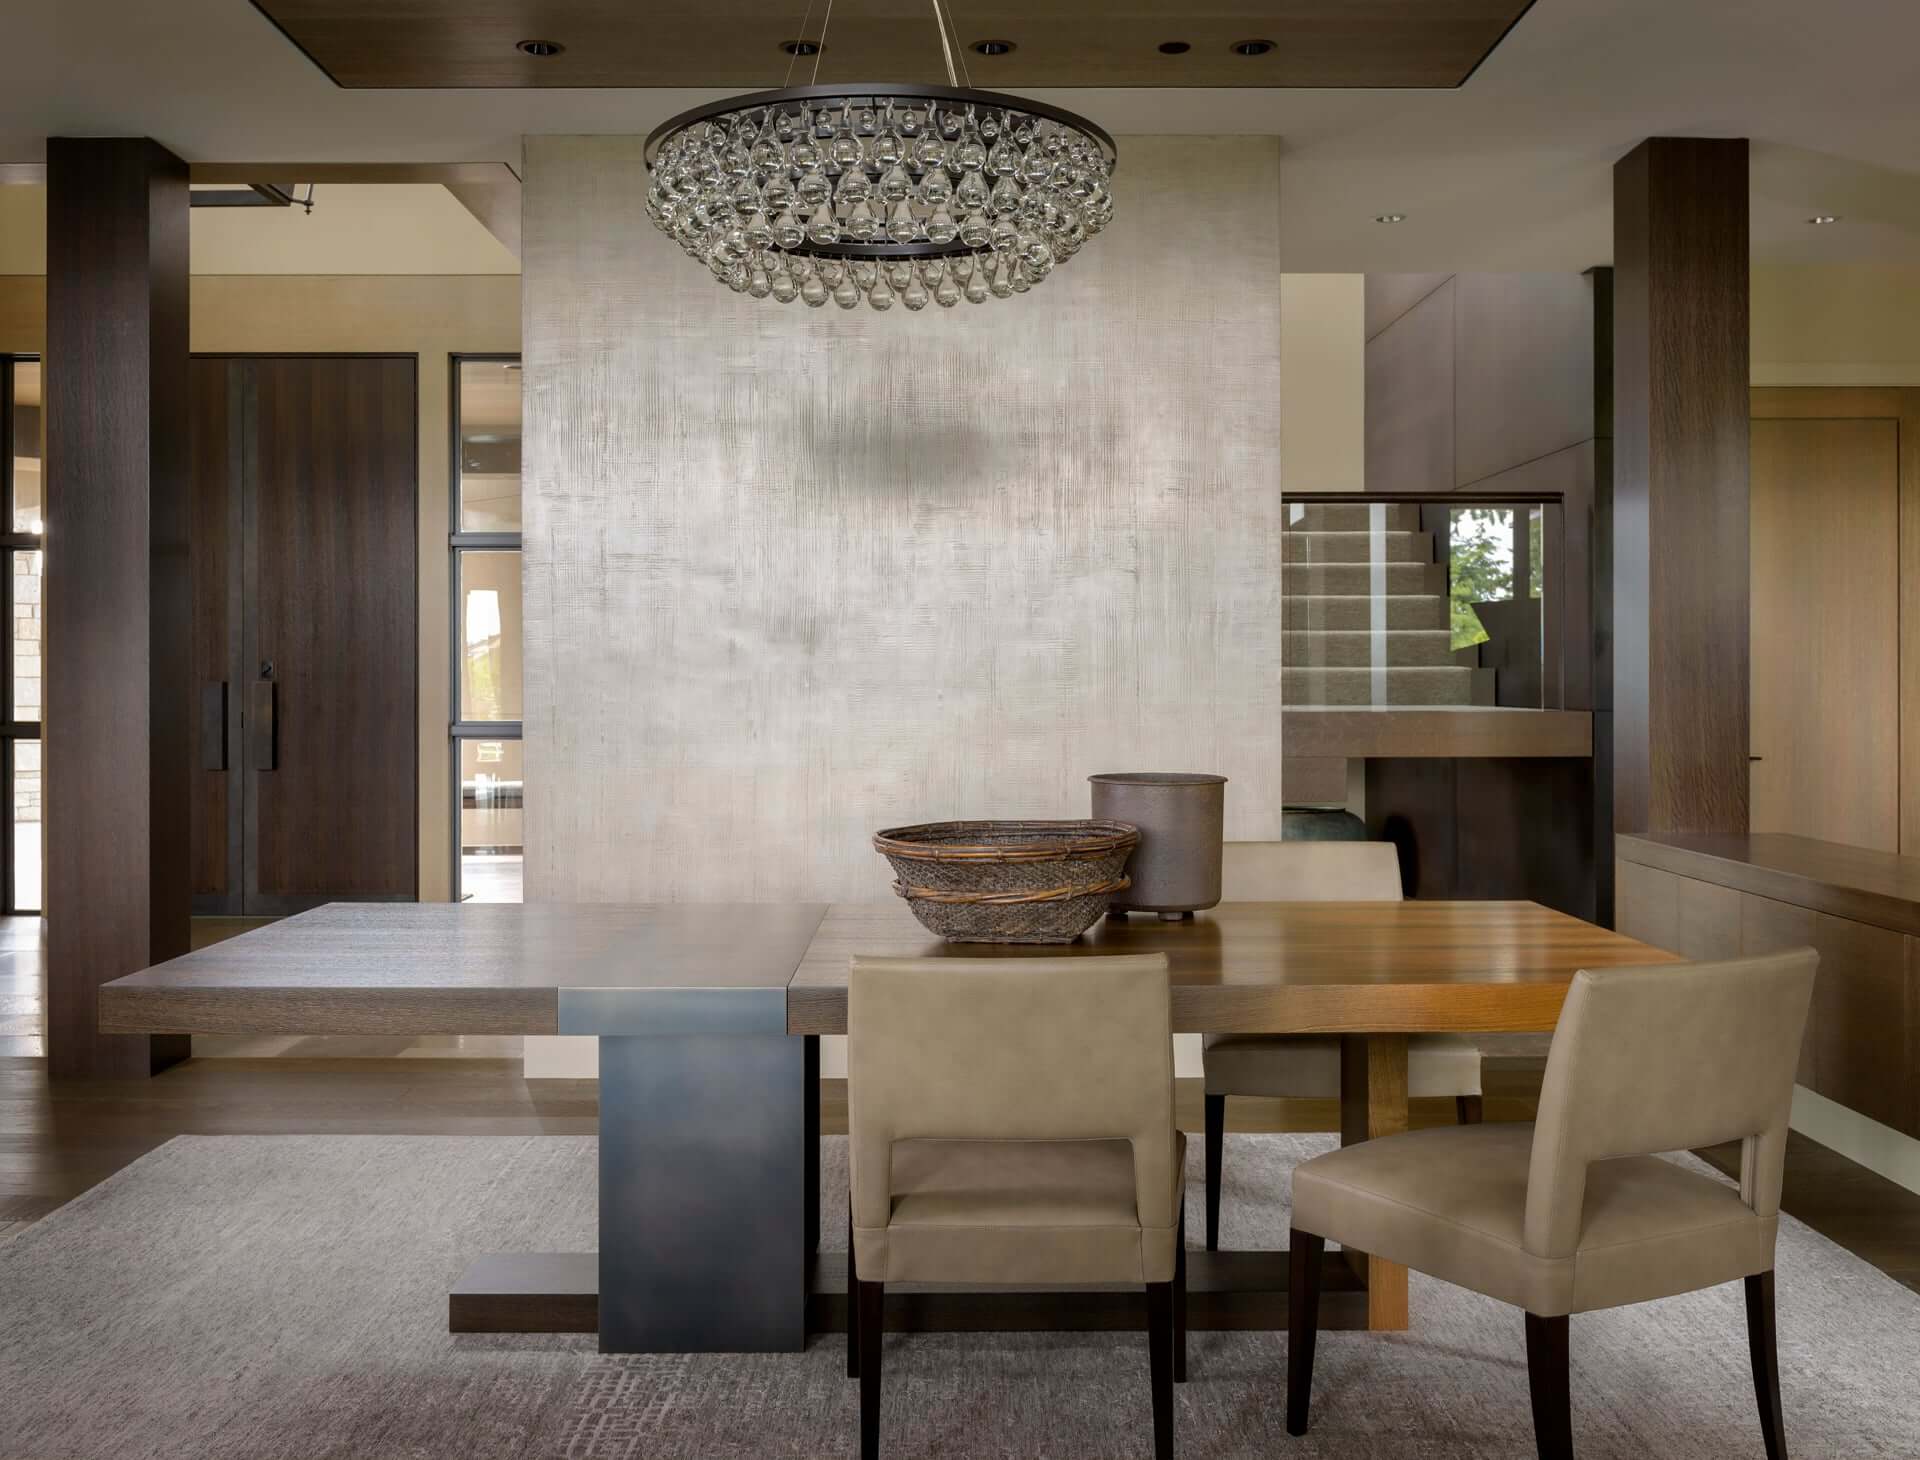 Modern custom furniture in the dining room made by Luma Design Workshop